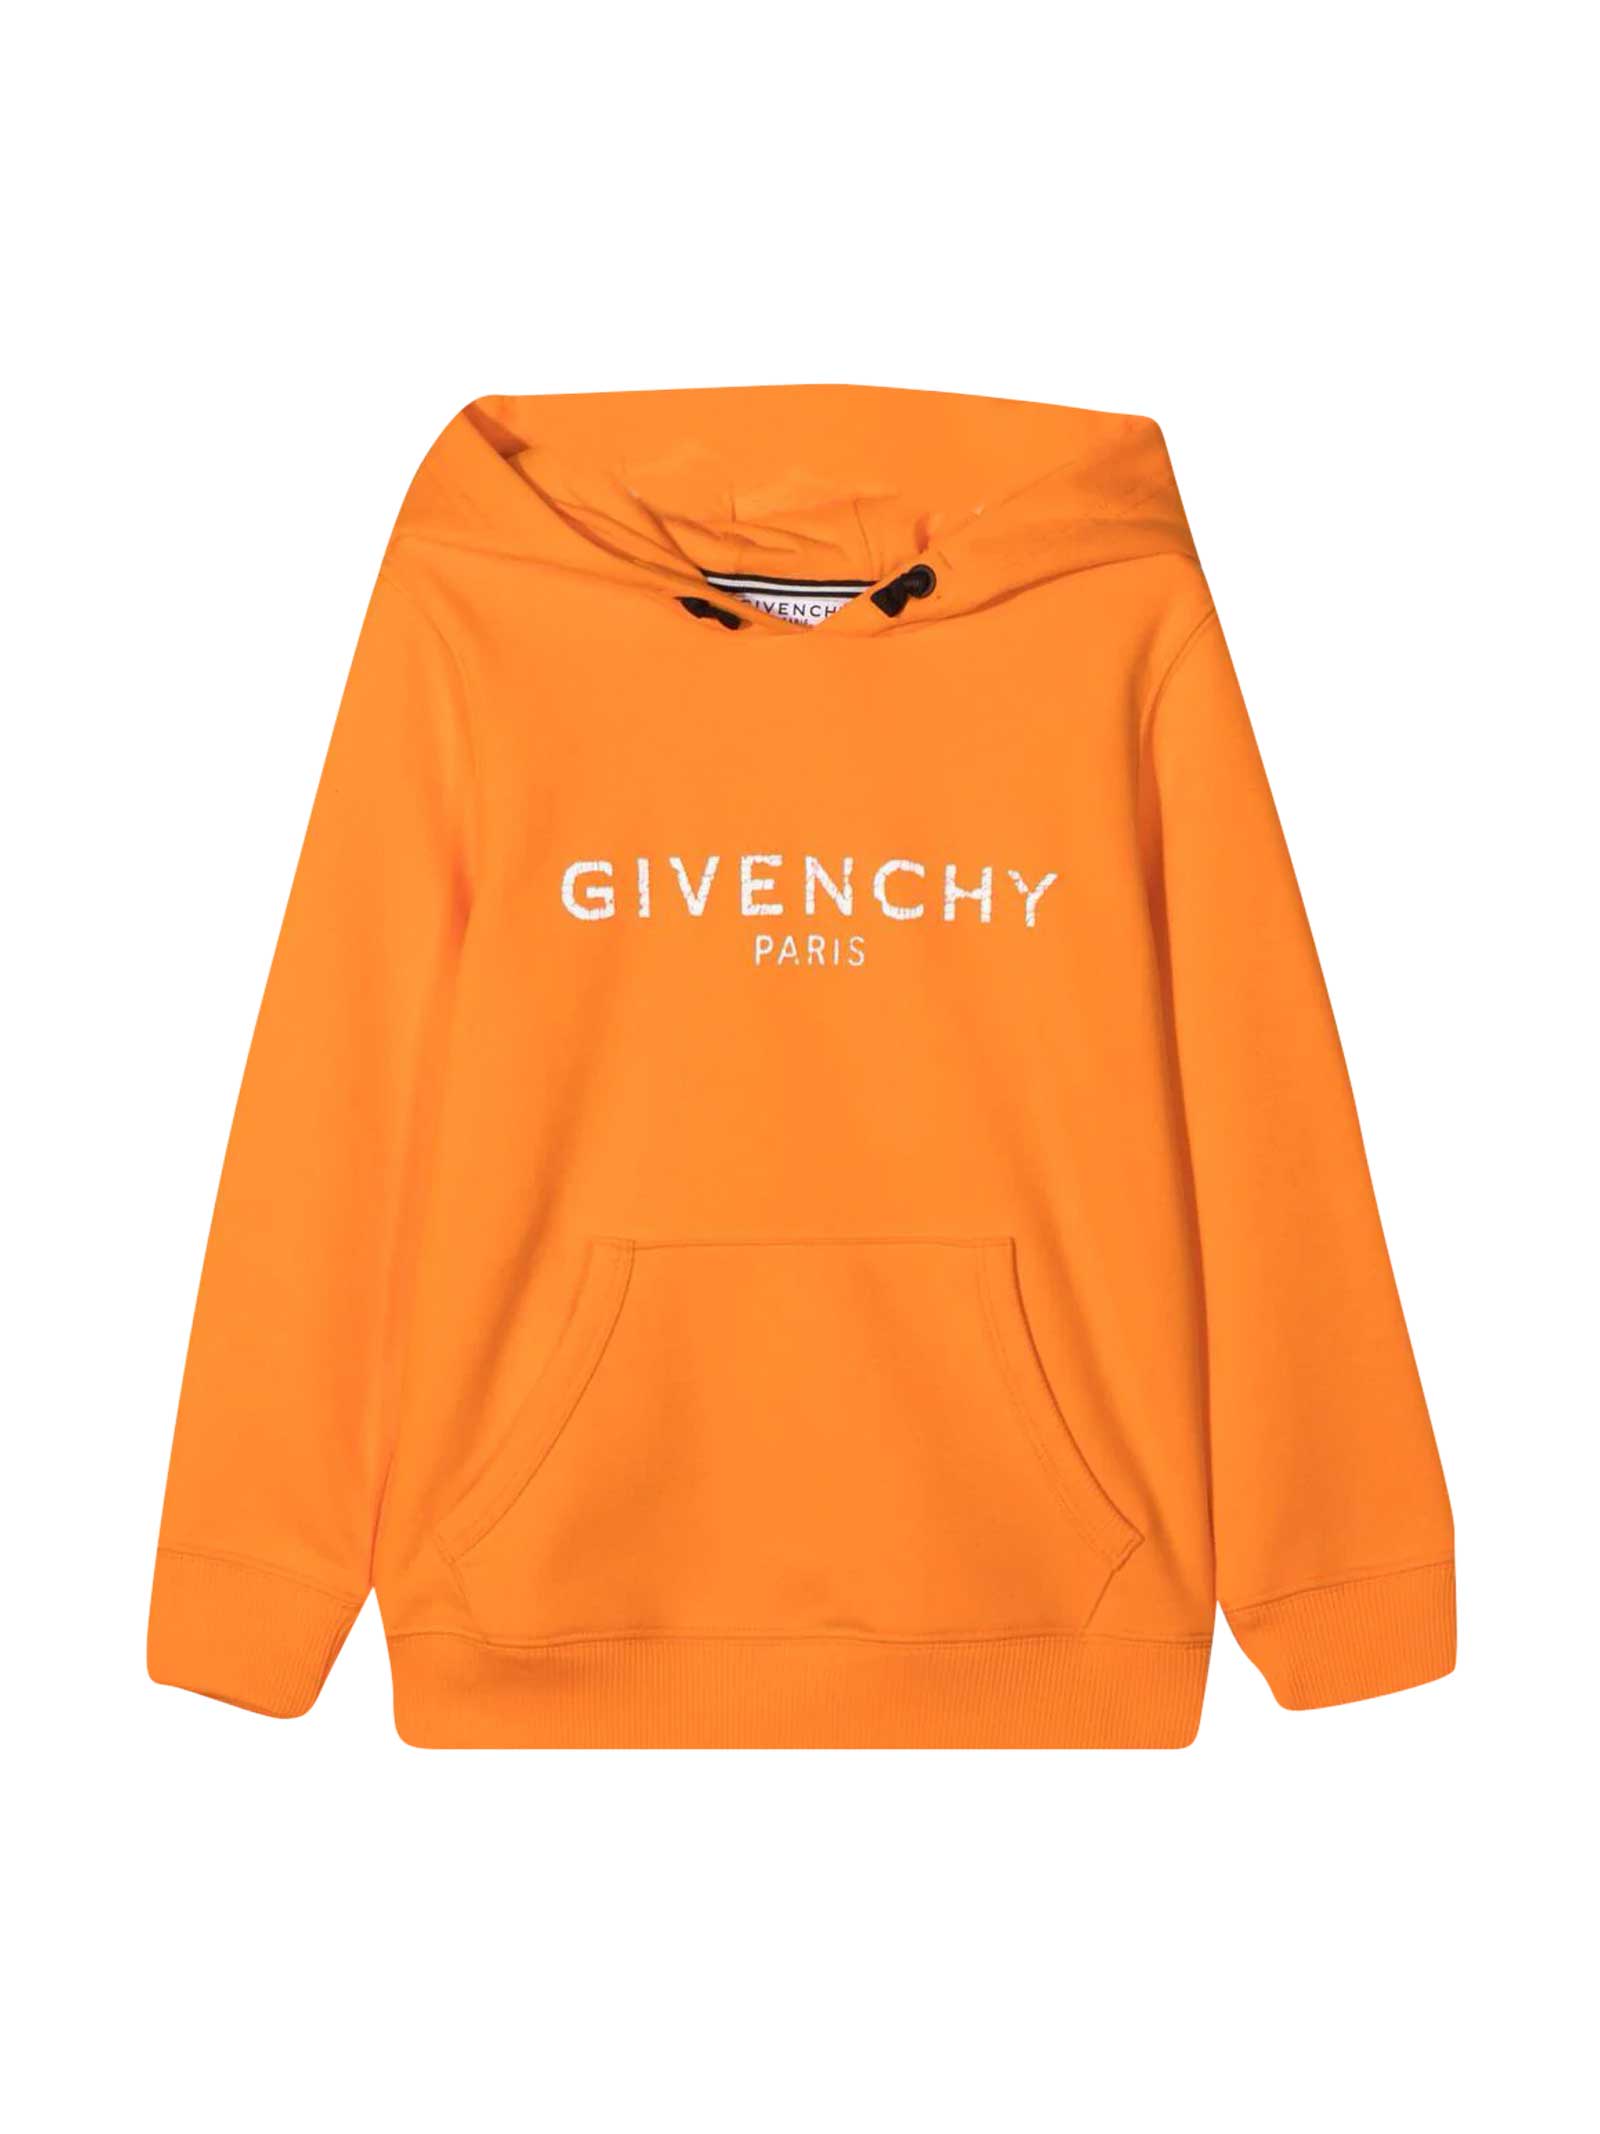 Givenchy Kids' Sweatshirt With Print In Orange